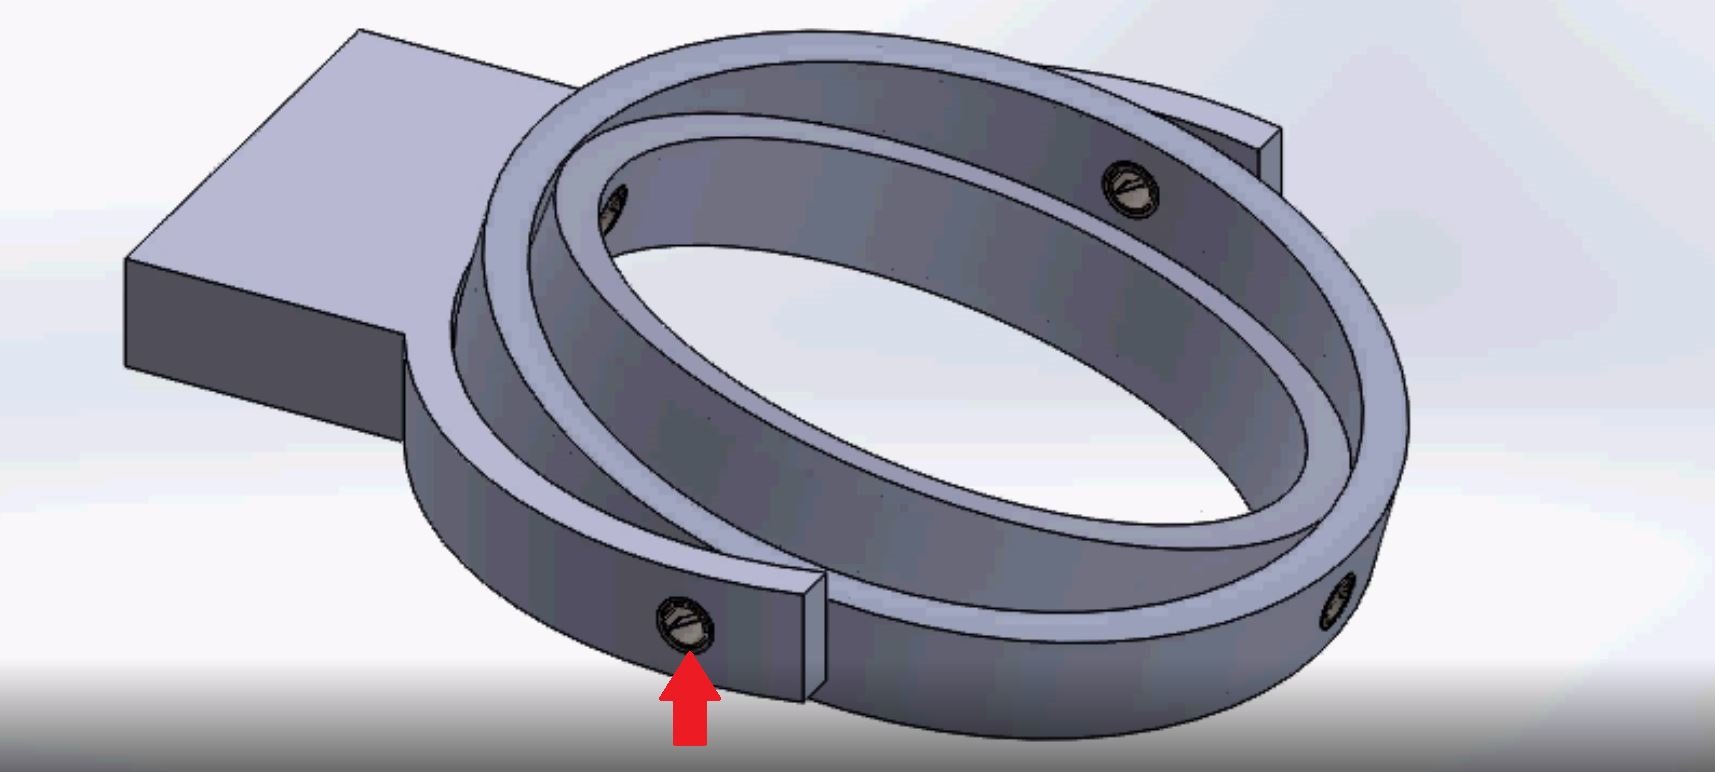 Gimbal with flexure bearings. Source: C-Flex Bearing Co., Inc.